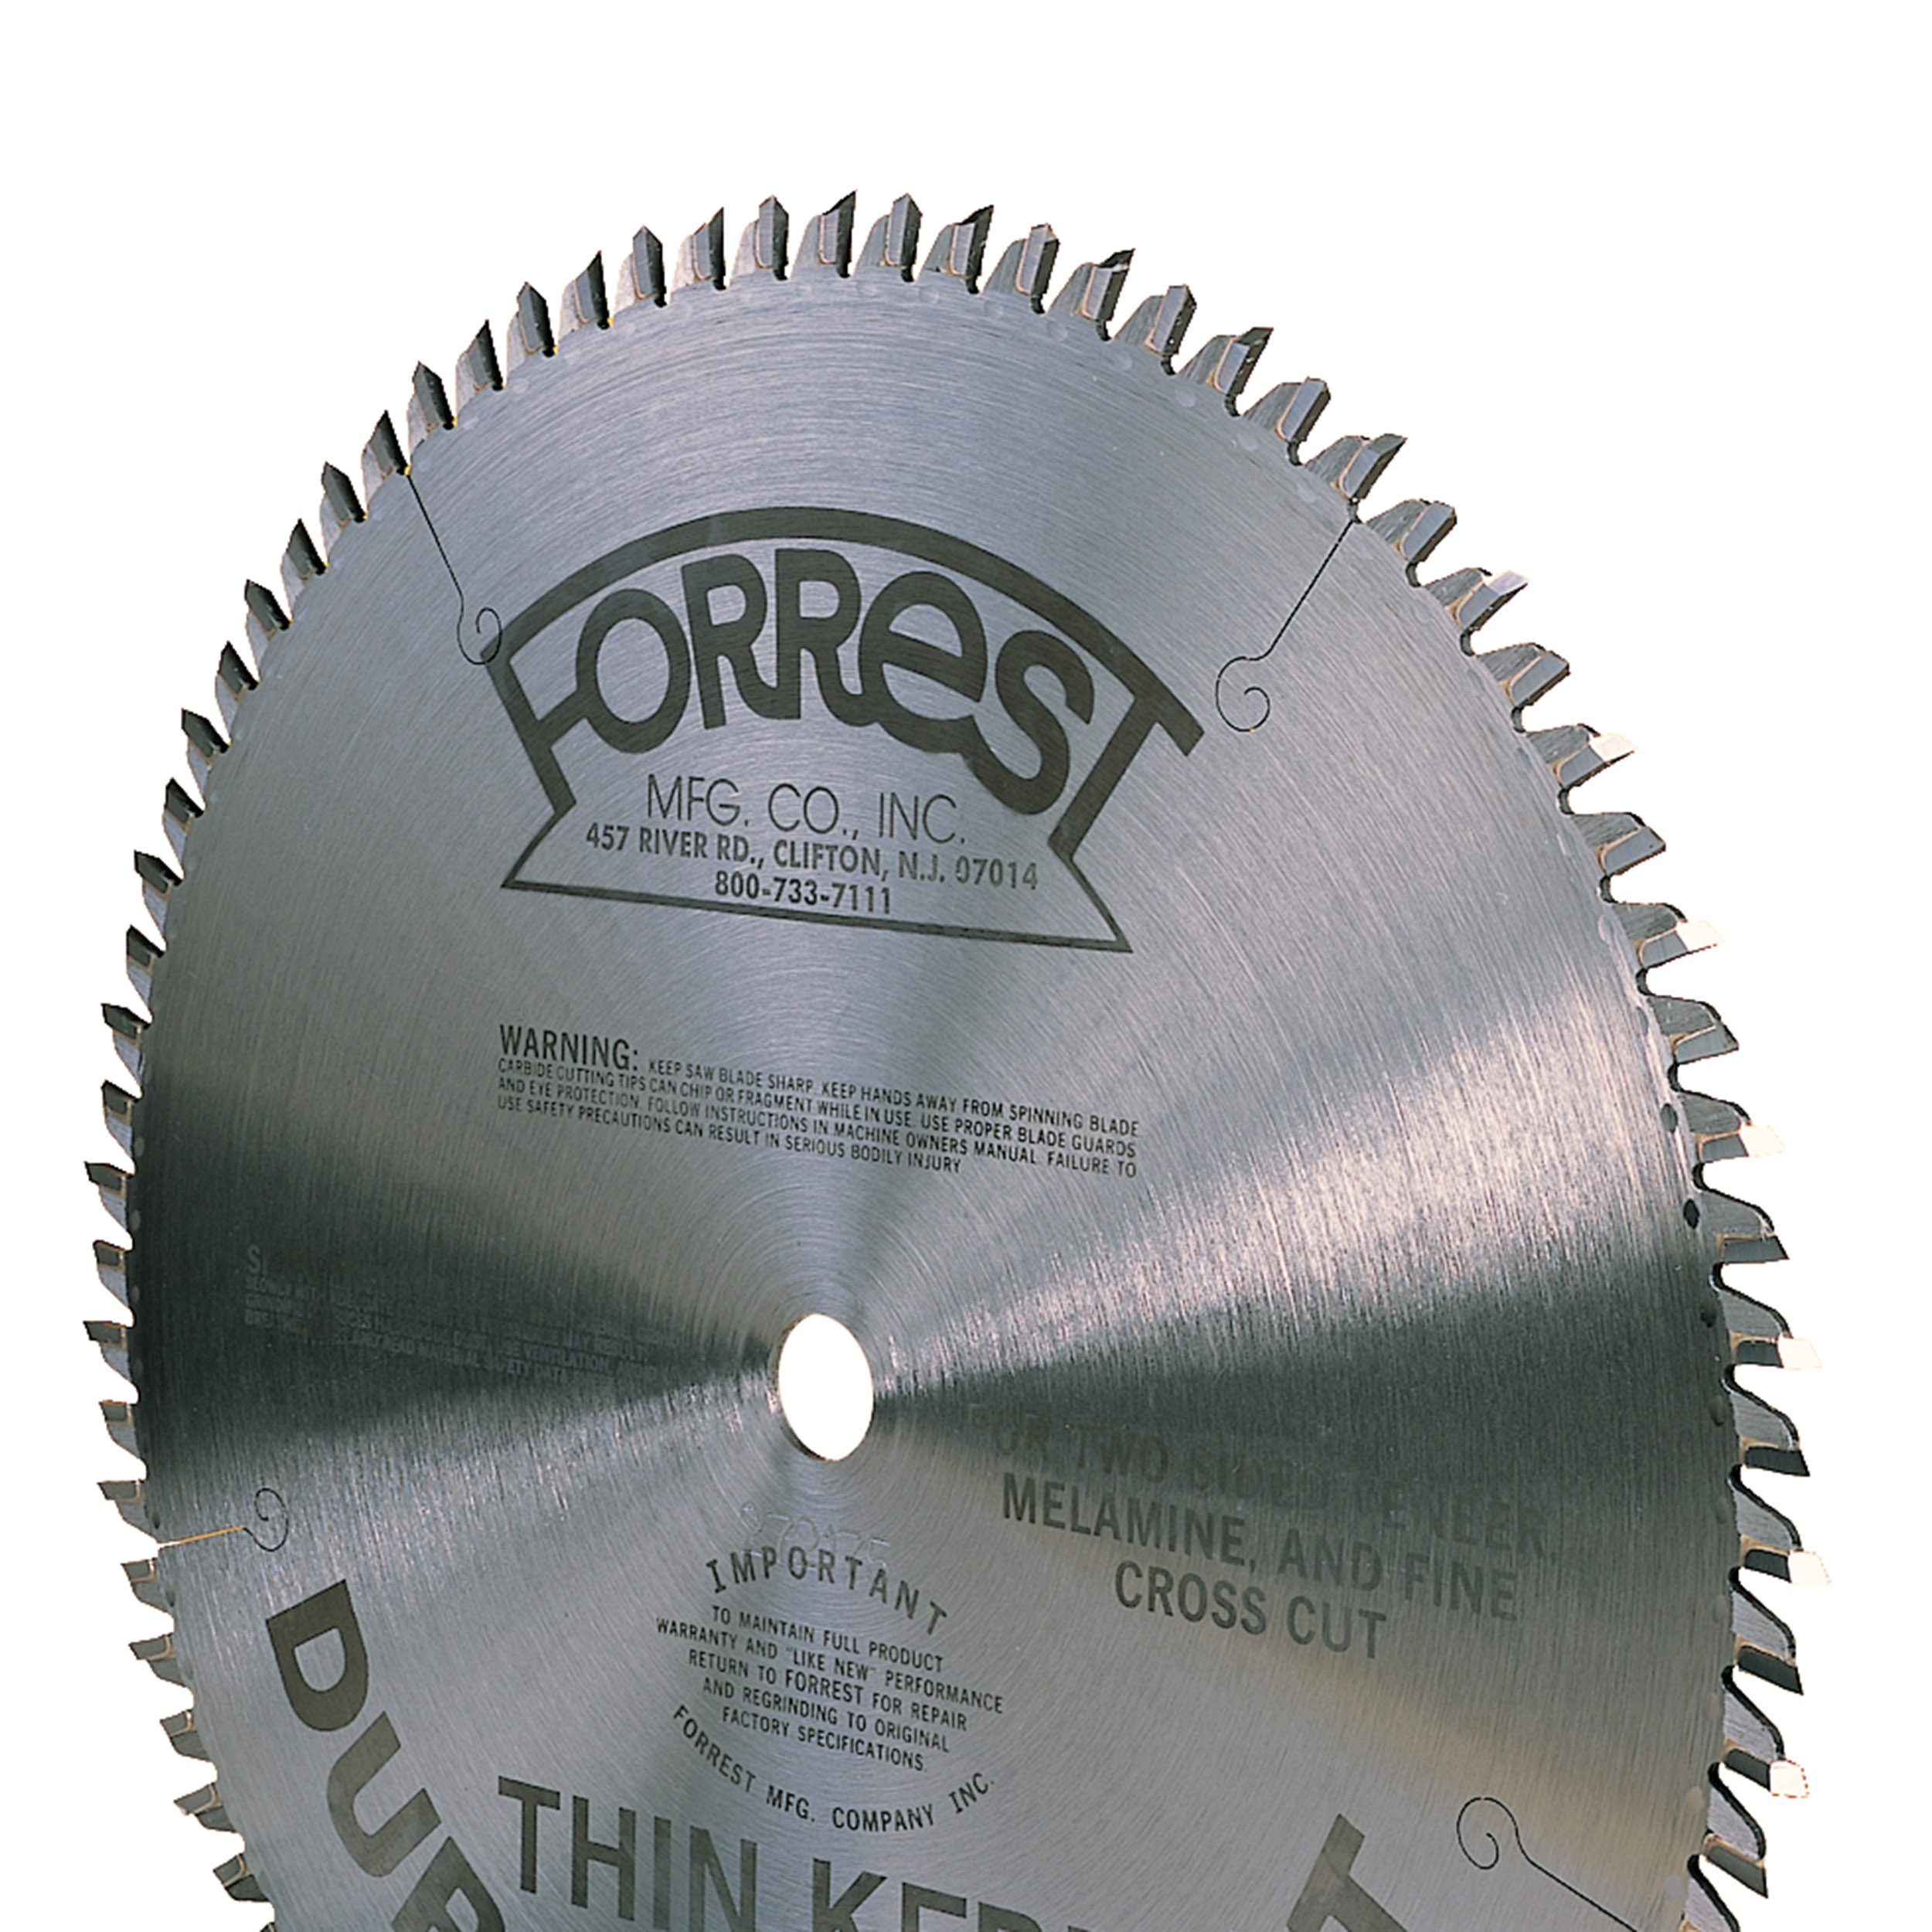 Forrest Dh10807100 Duraline Hi-a/t Saw Blade, Thin-kerf, 10" X 80 Tooth